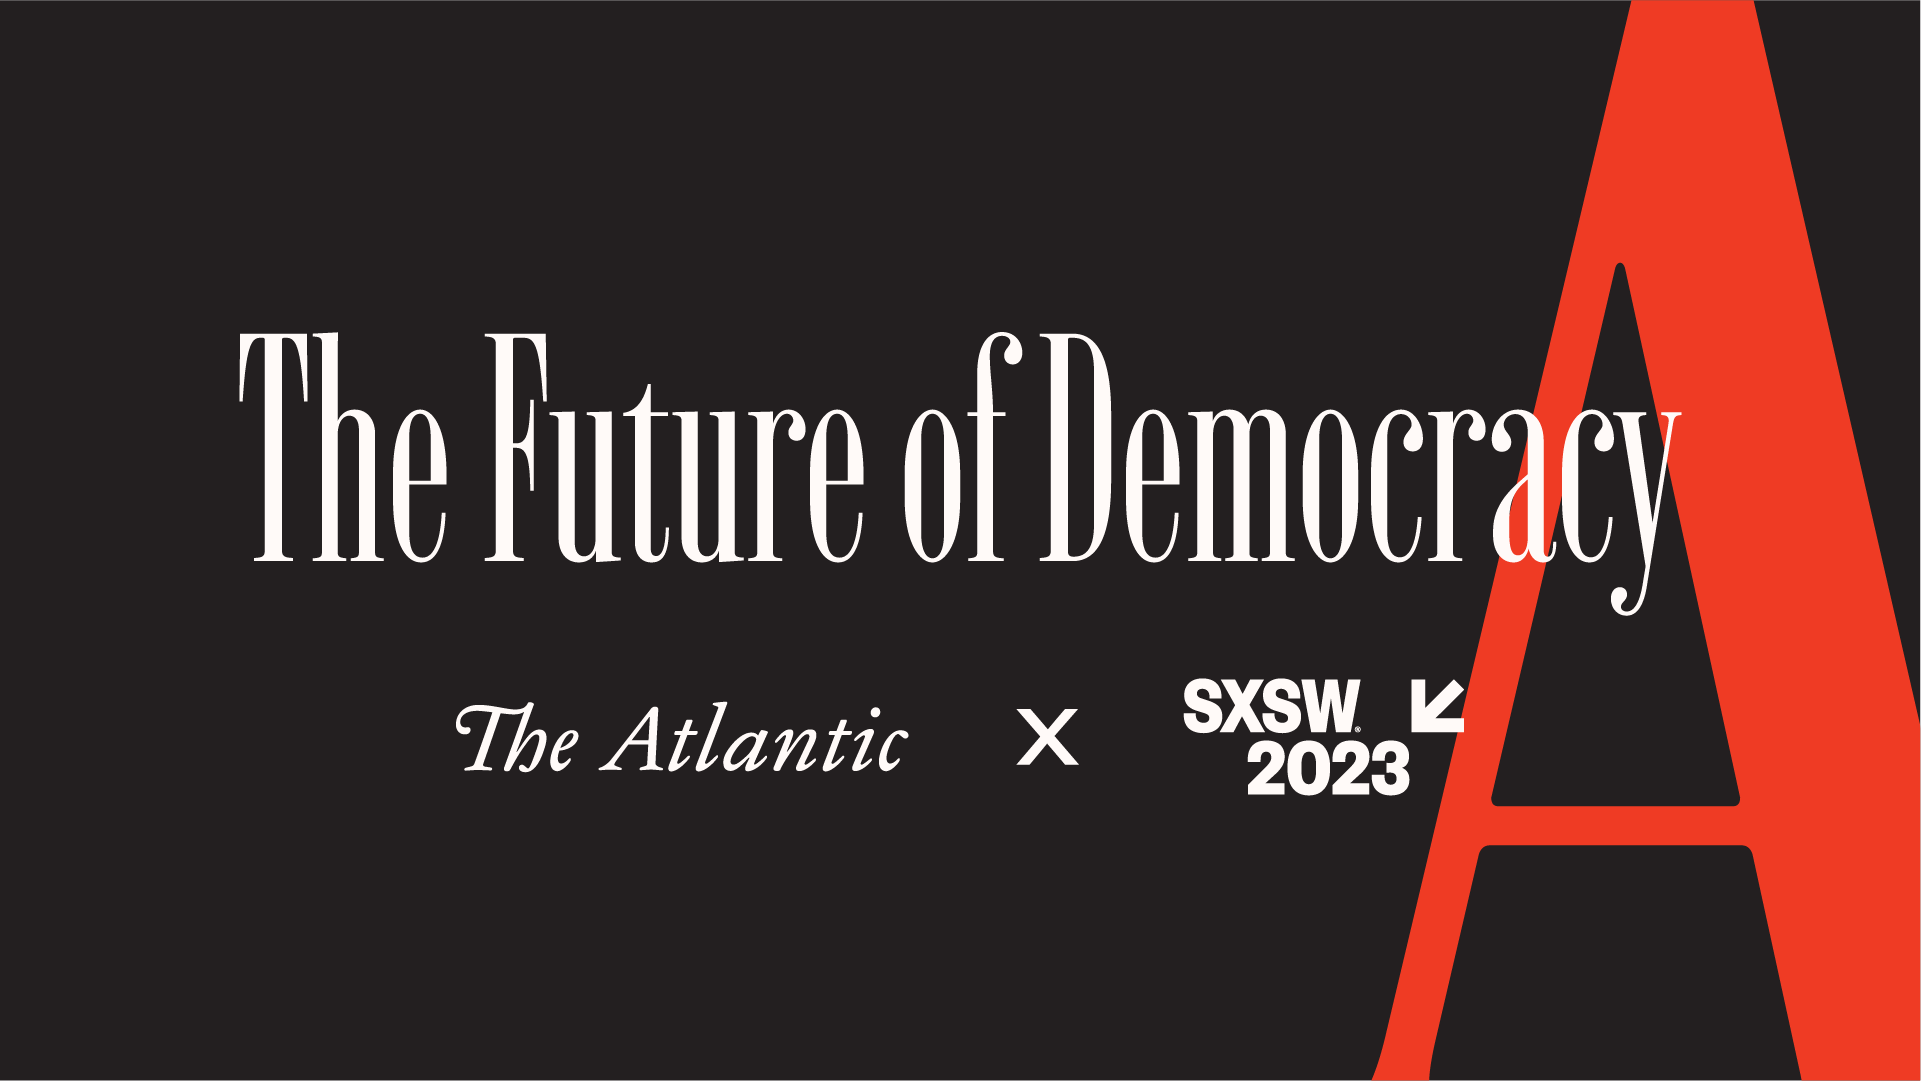 The Atlantic Announces “The Future of Democracy” 